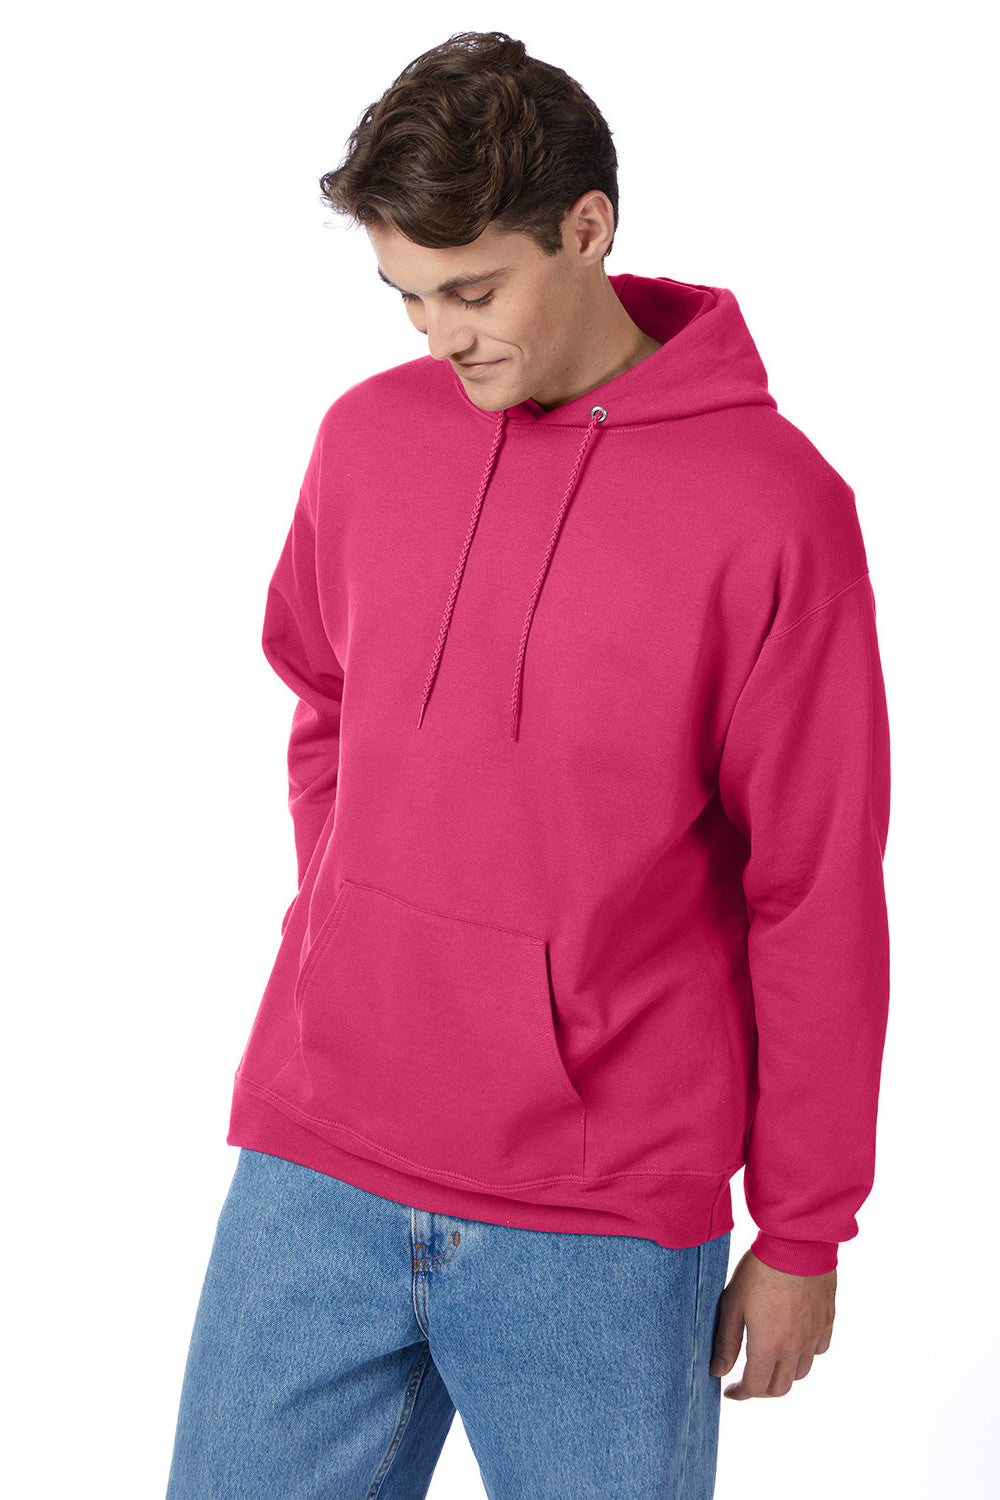 Hanes P170 Mens EcoSmart Print Pro XP Hooded Sweatshirt Hoodie Wow Pink 3Q